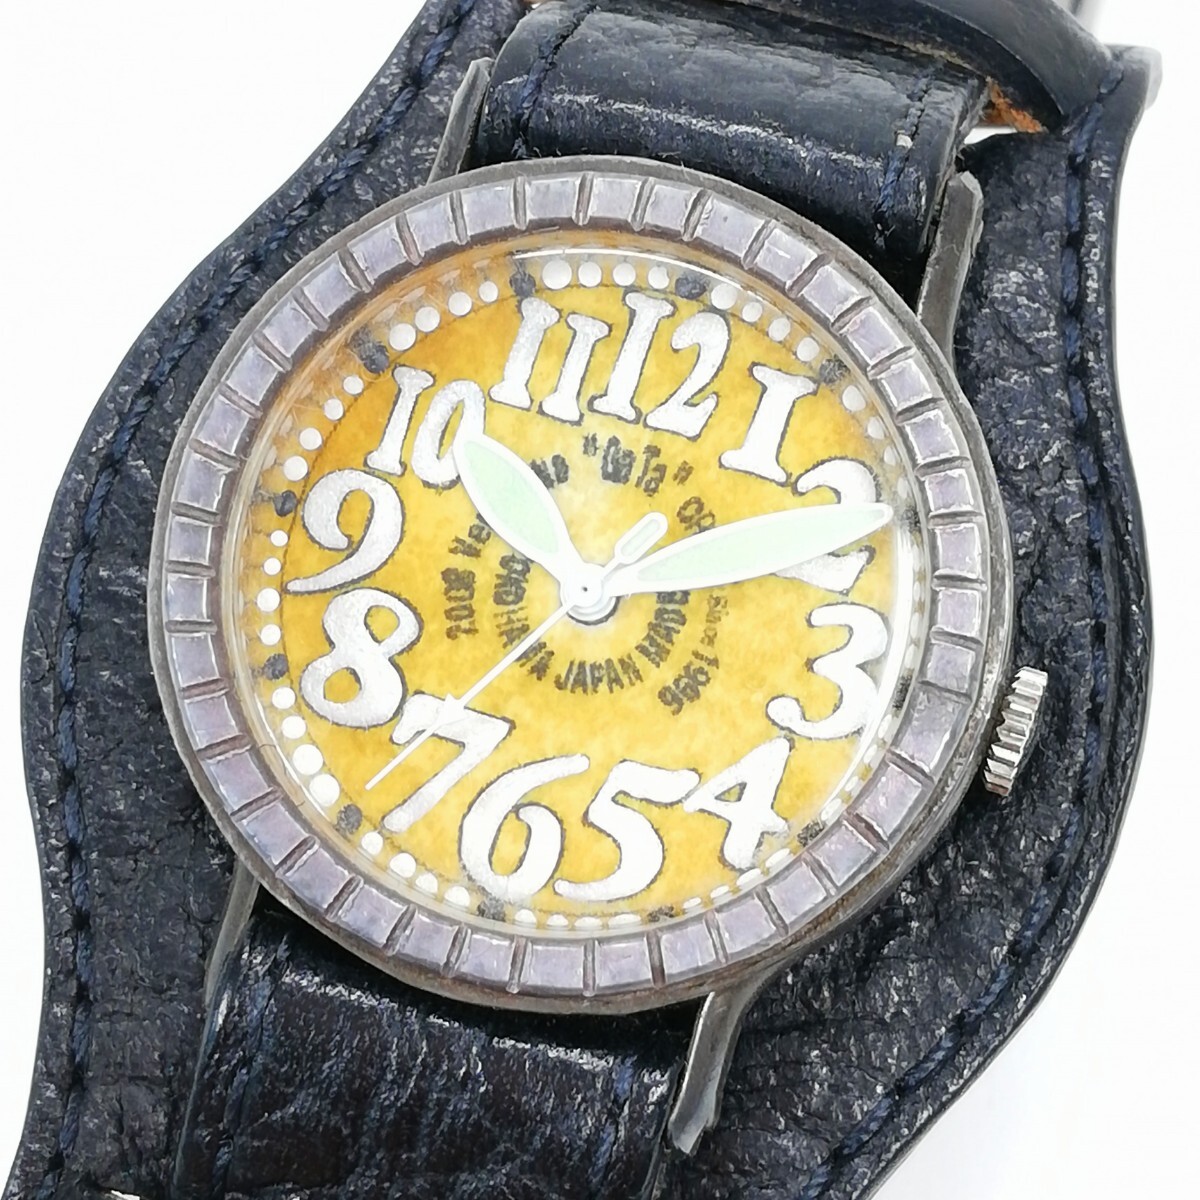 231 GaTa watch smith GaTa handmade wristwatch analog quartz antique style handcraft men's yellow dial operation not confirmed, Analog (quartz type), 3 hands (hour, minutes, seconds), others